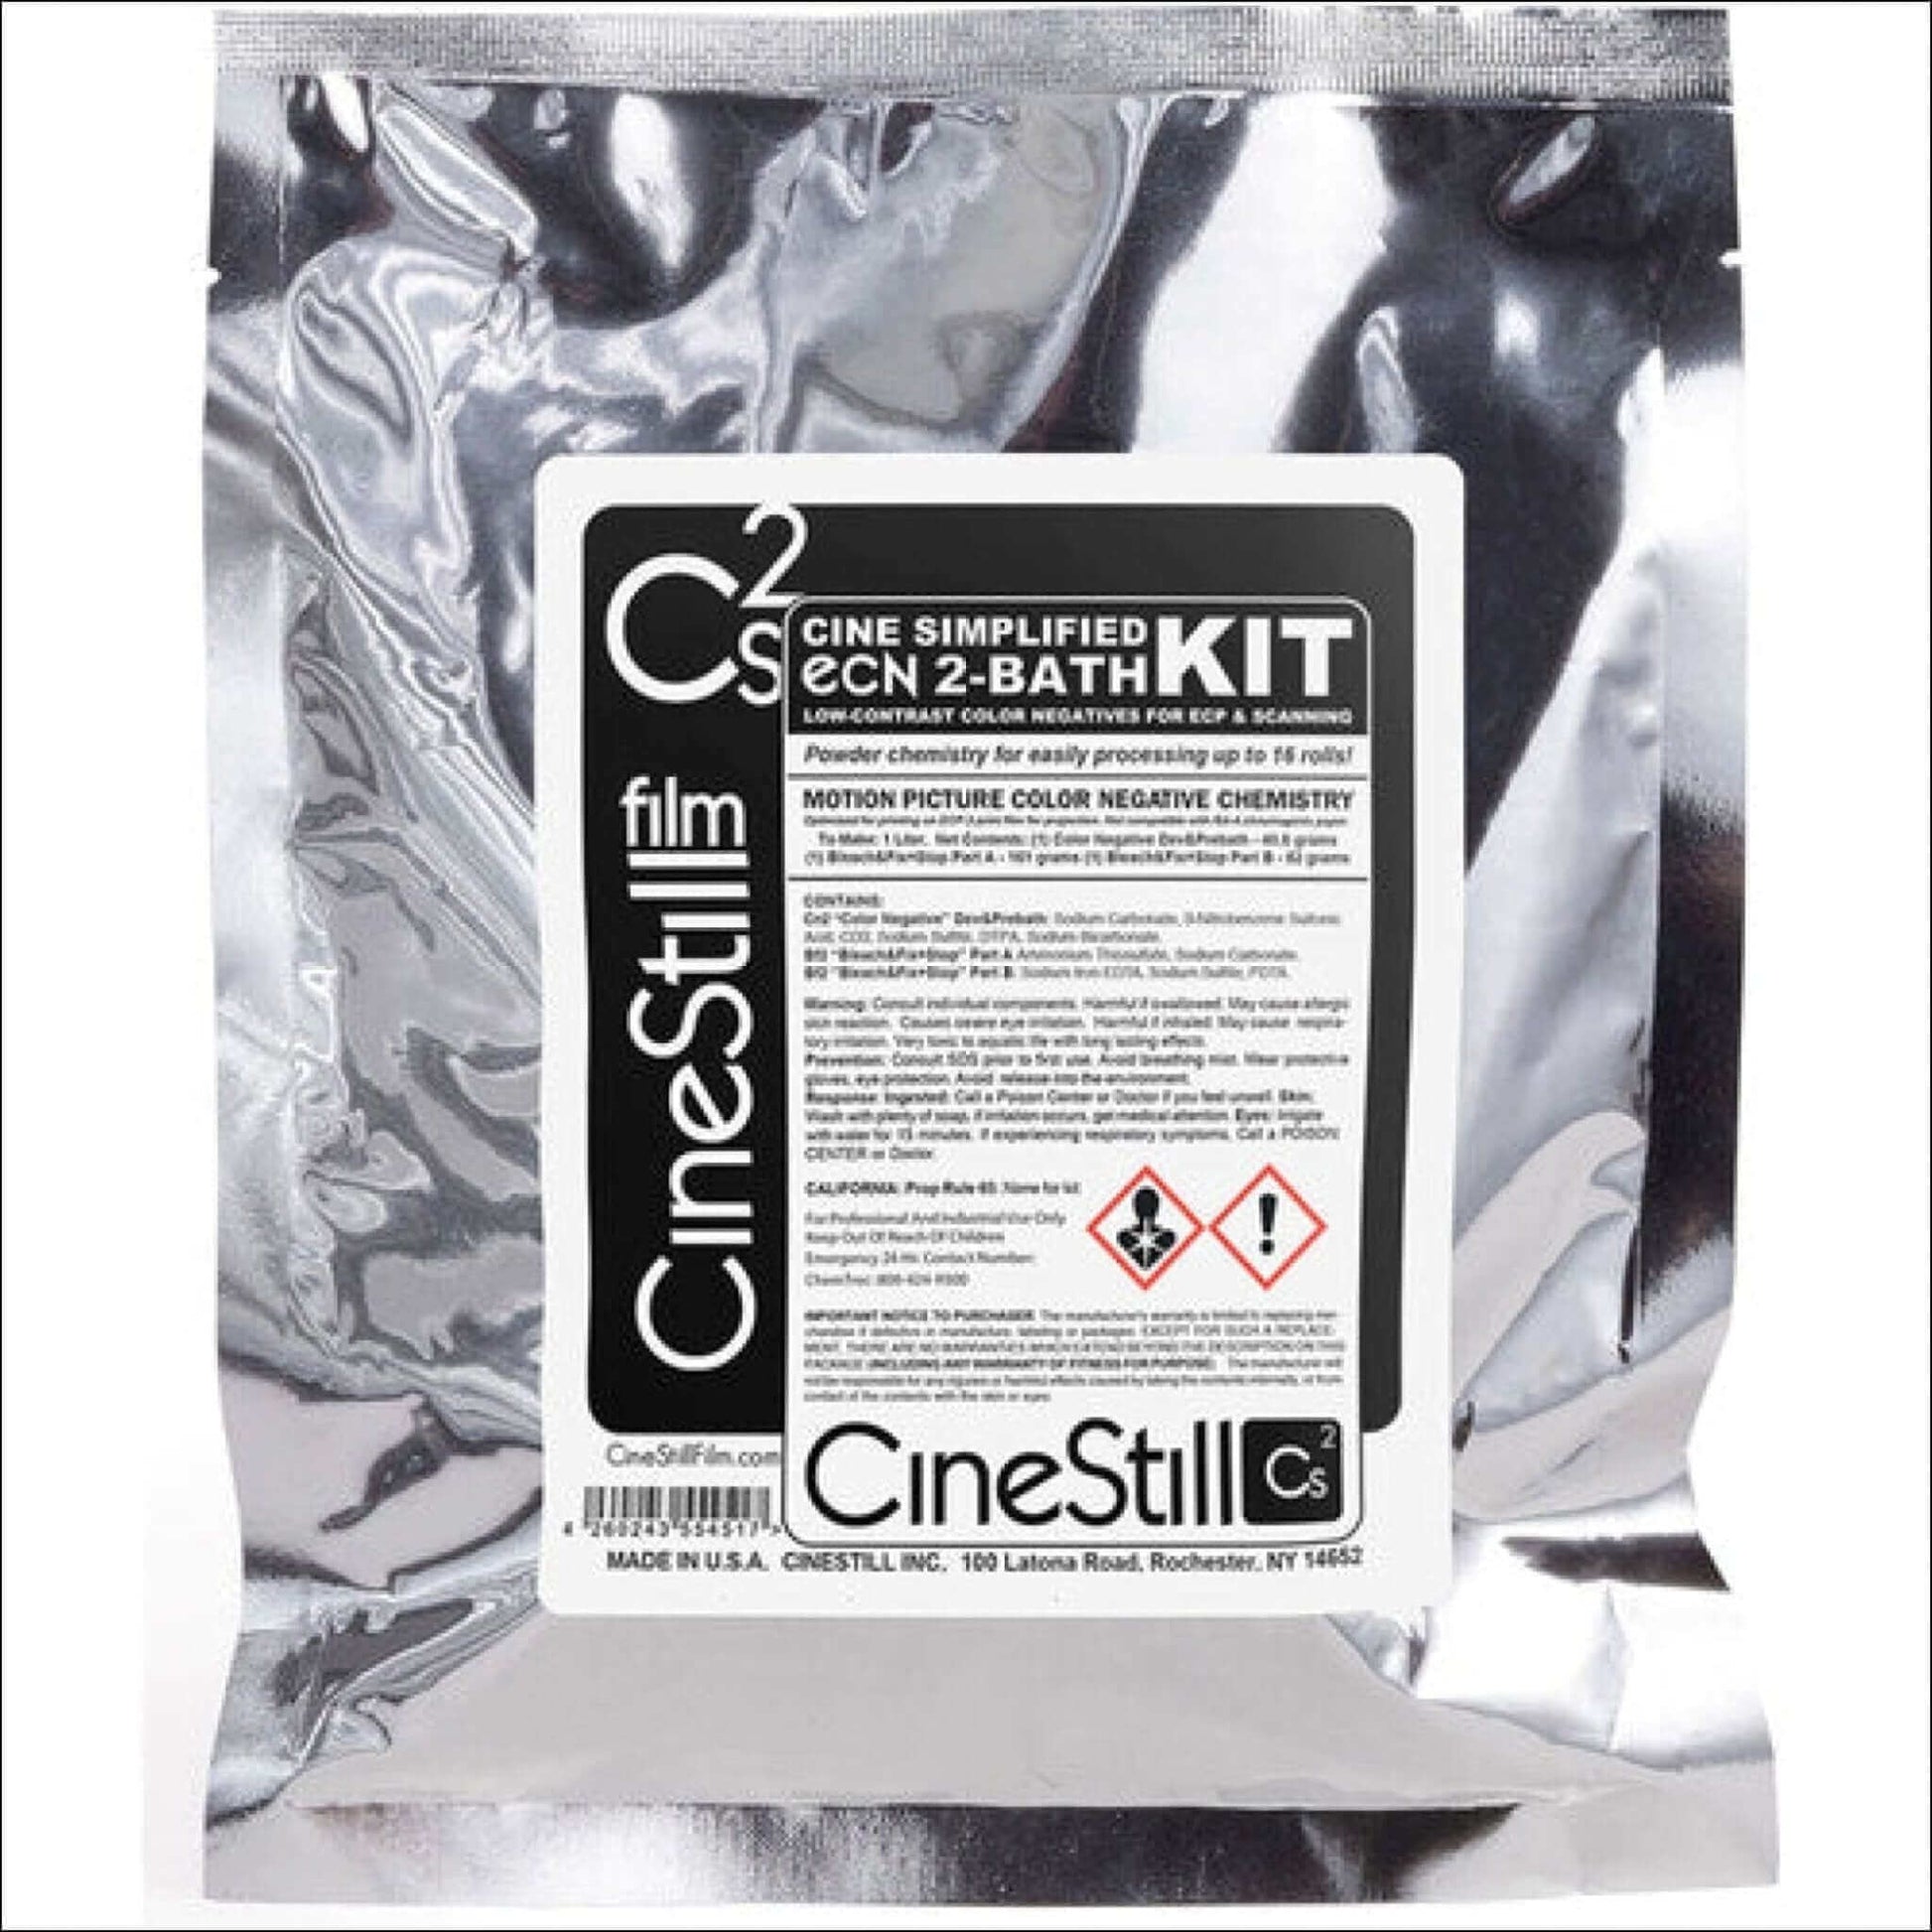 Cinestill Simplified Cs2 Ecn 2-bath Kit